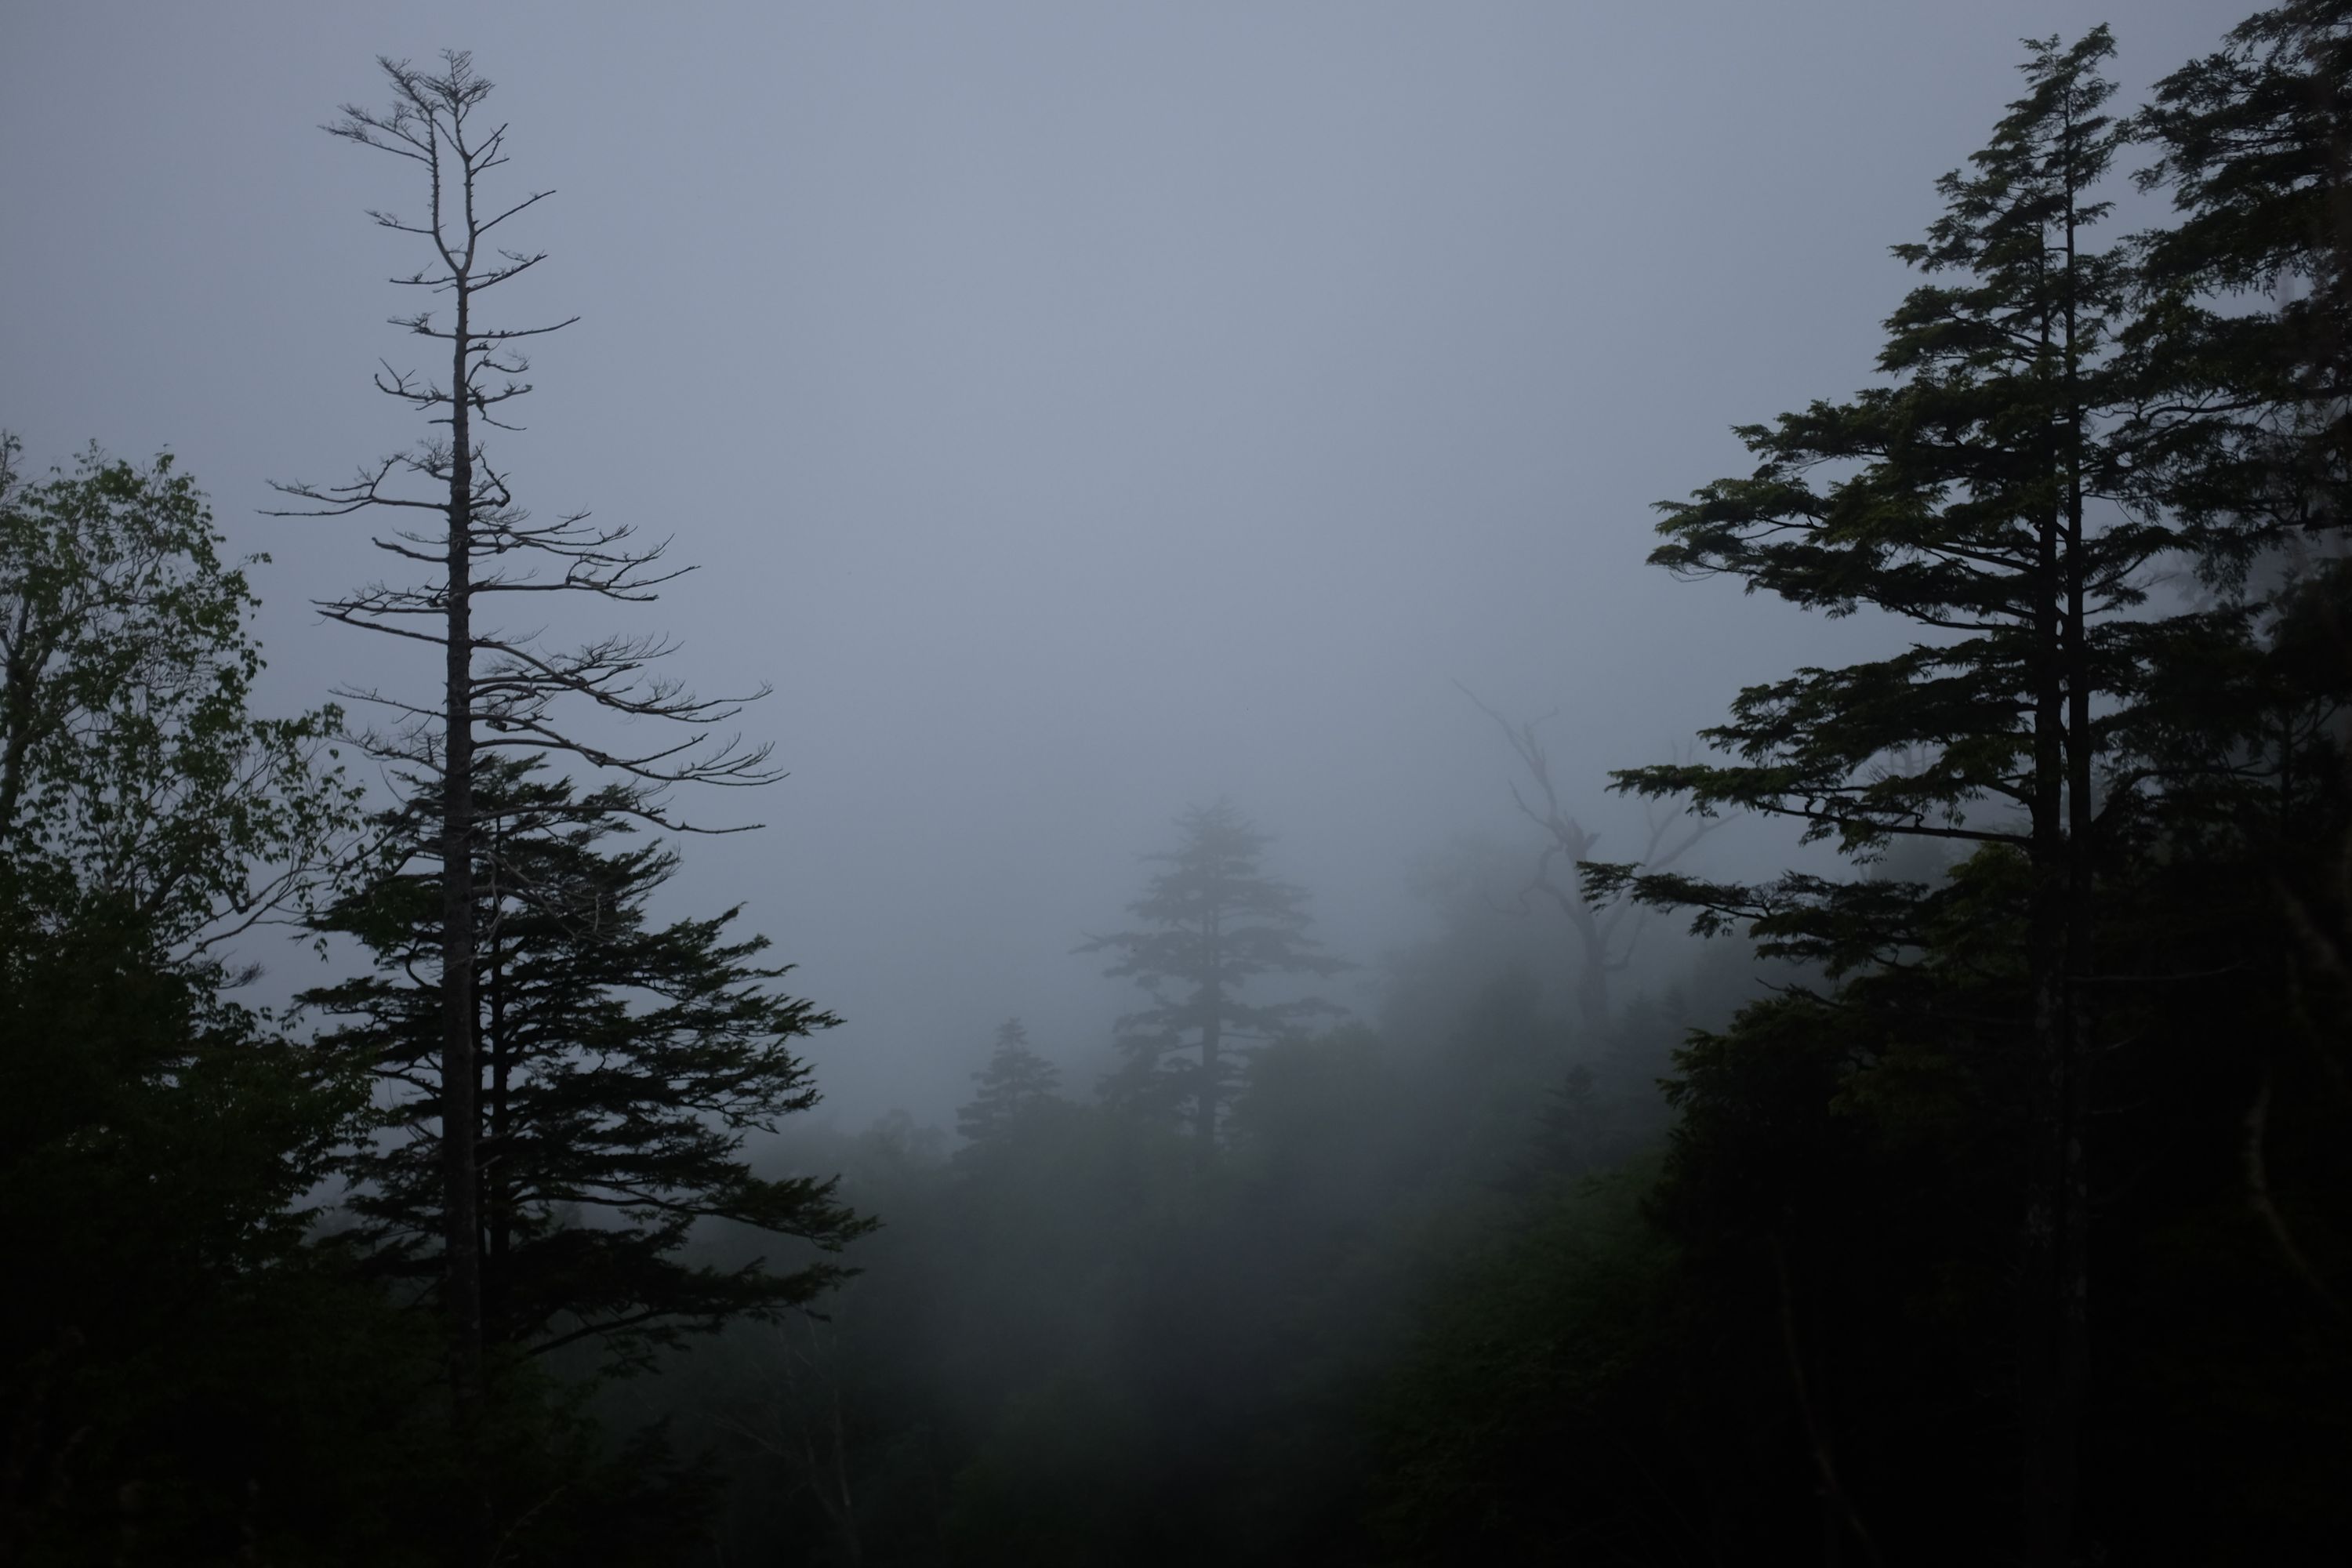 Trees peek through the thick fog.